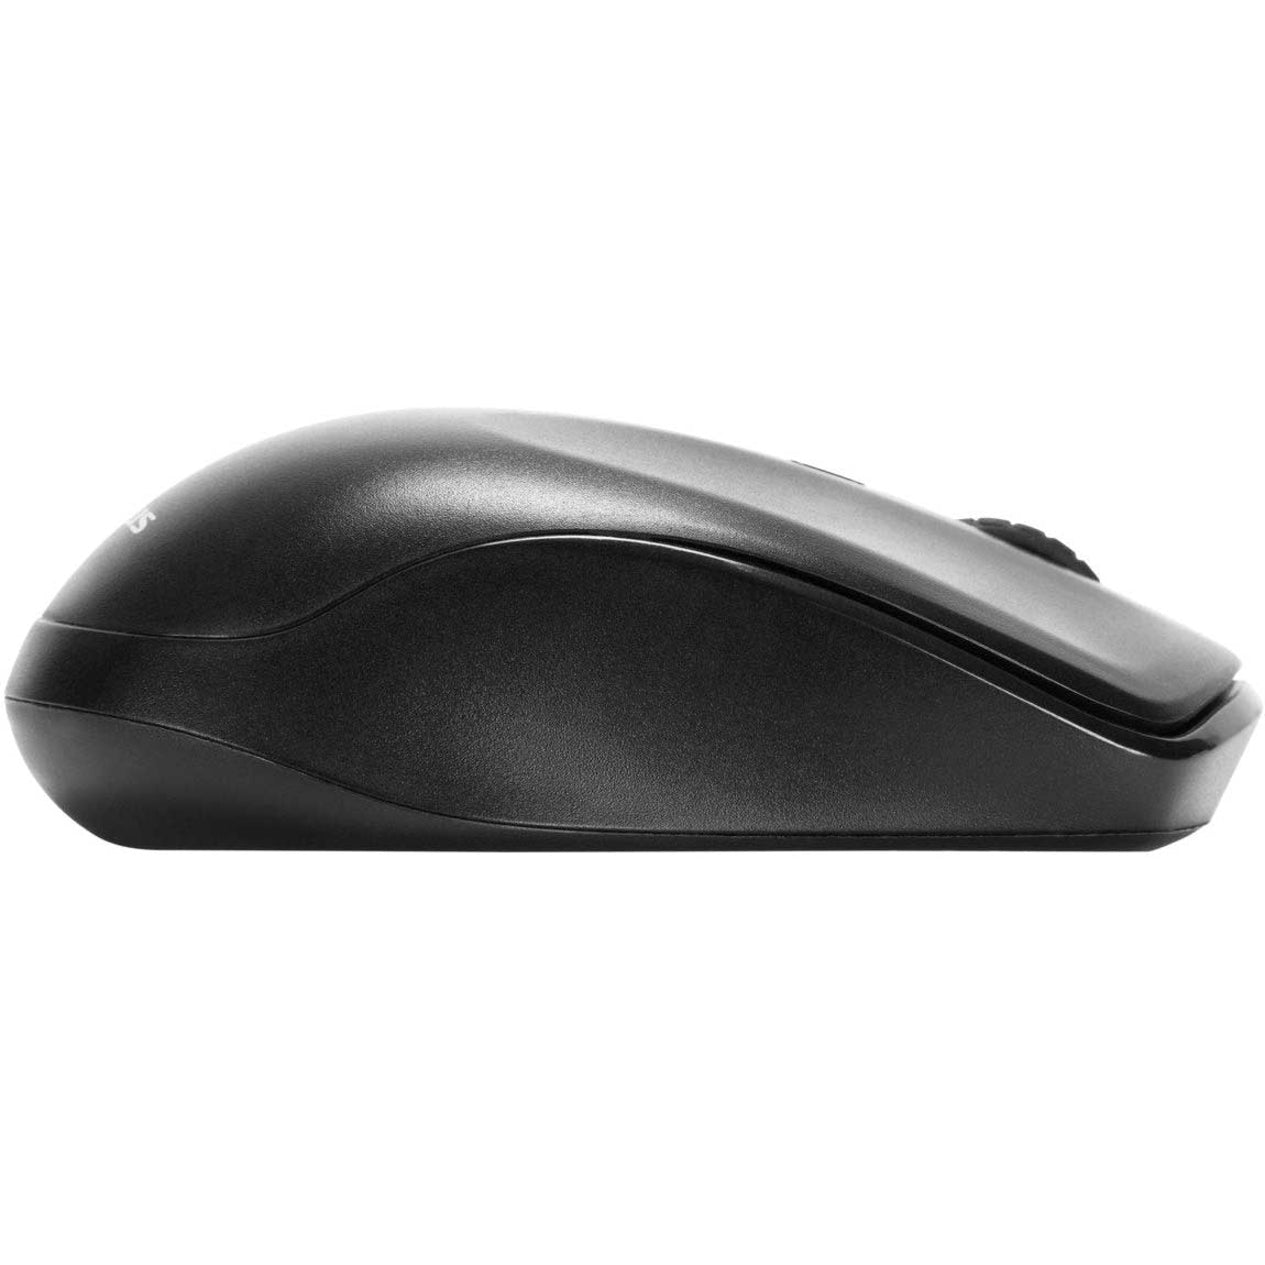 Targus KM610 Wireless Keyboard and Mouse Combo (Black) (AKM610BT) Alternate-Image2 image